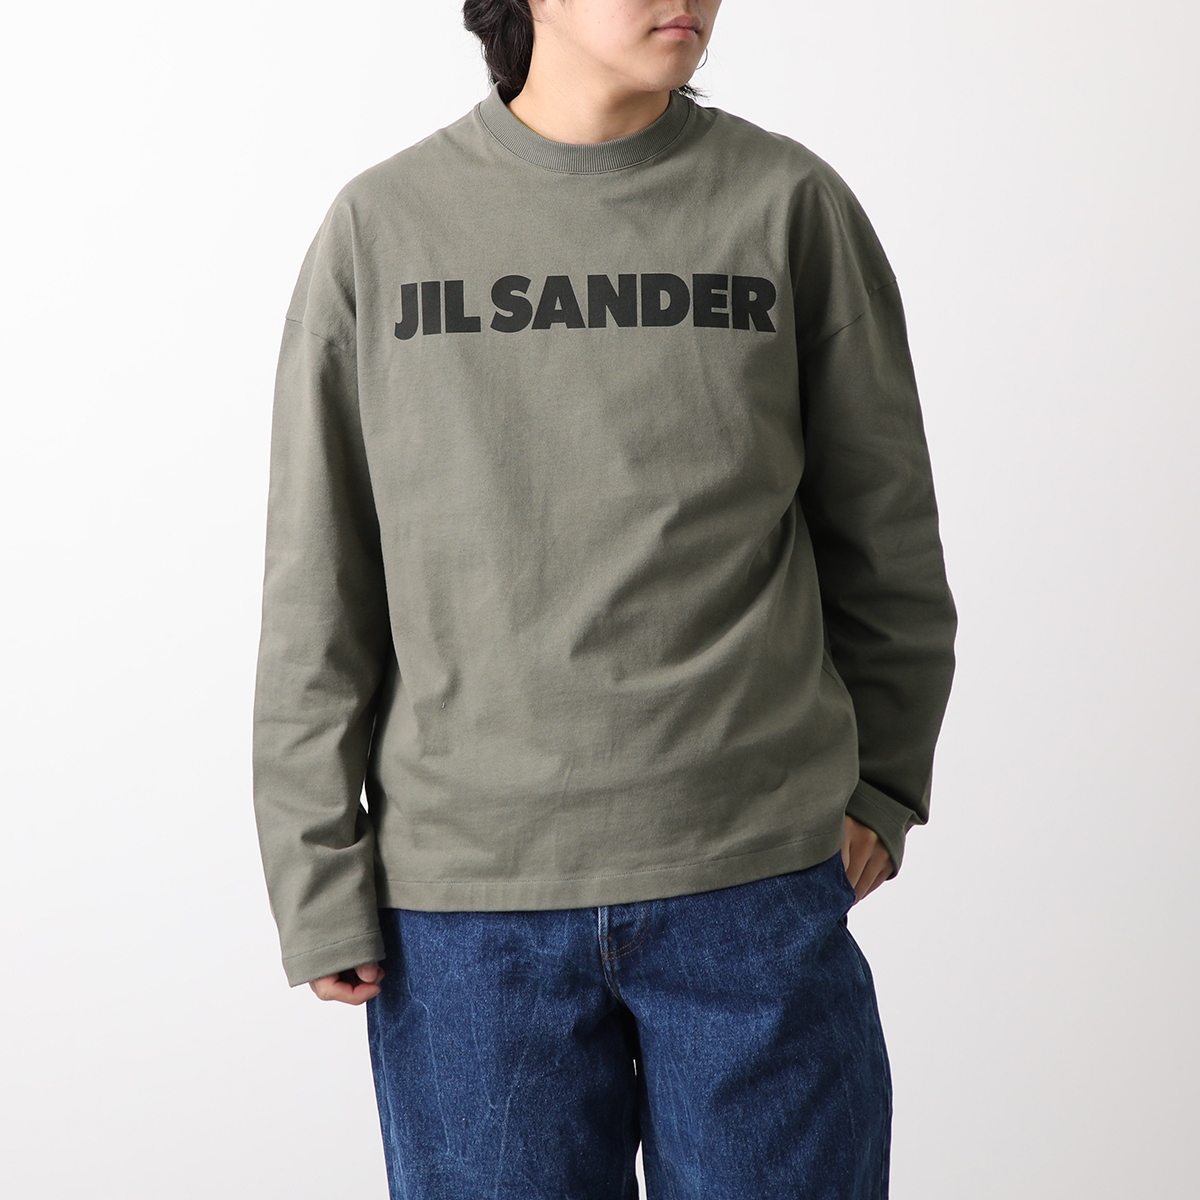 JIL SANDER ジルサンダー Tシャツ J22GC0136 J20215 メンズ 長袖 ロンT...